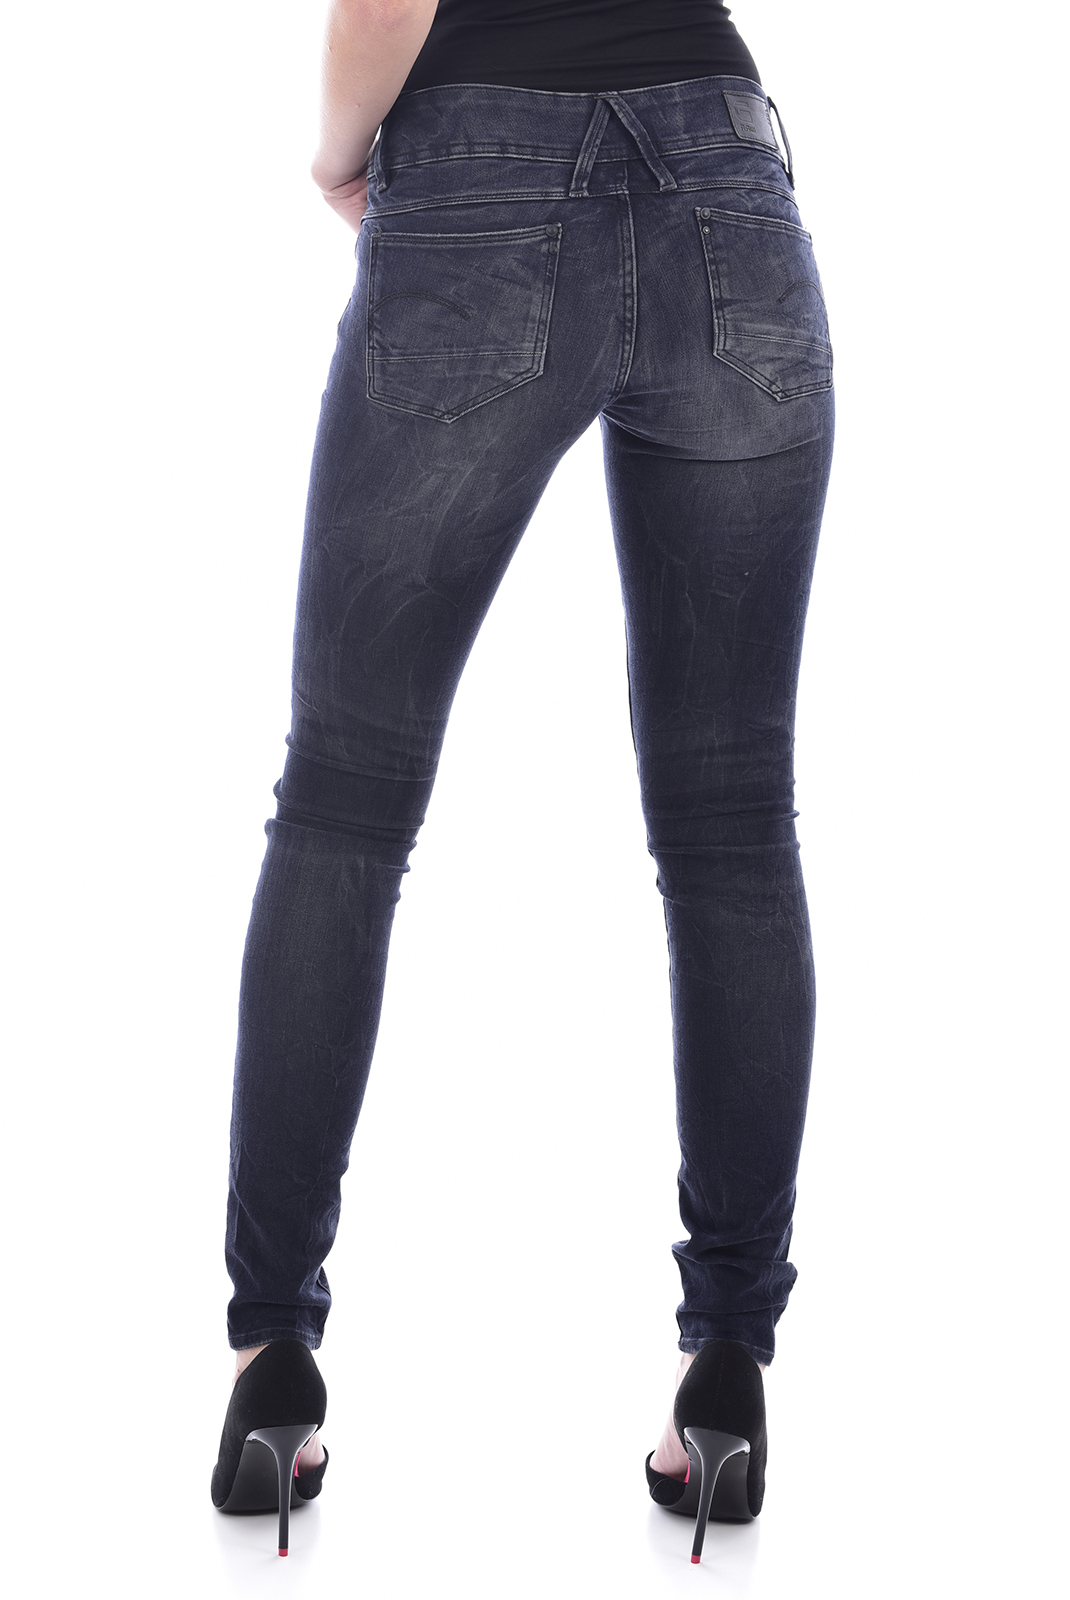 Jeans bleu skinny lynn G-star - 60885.6545.89